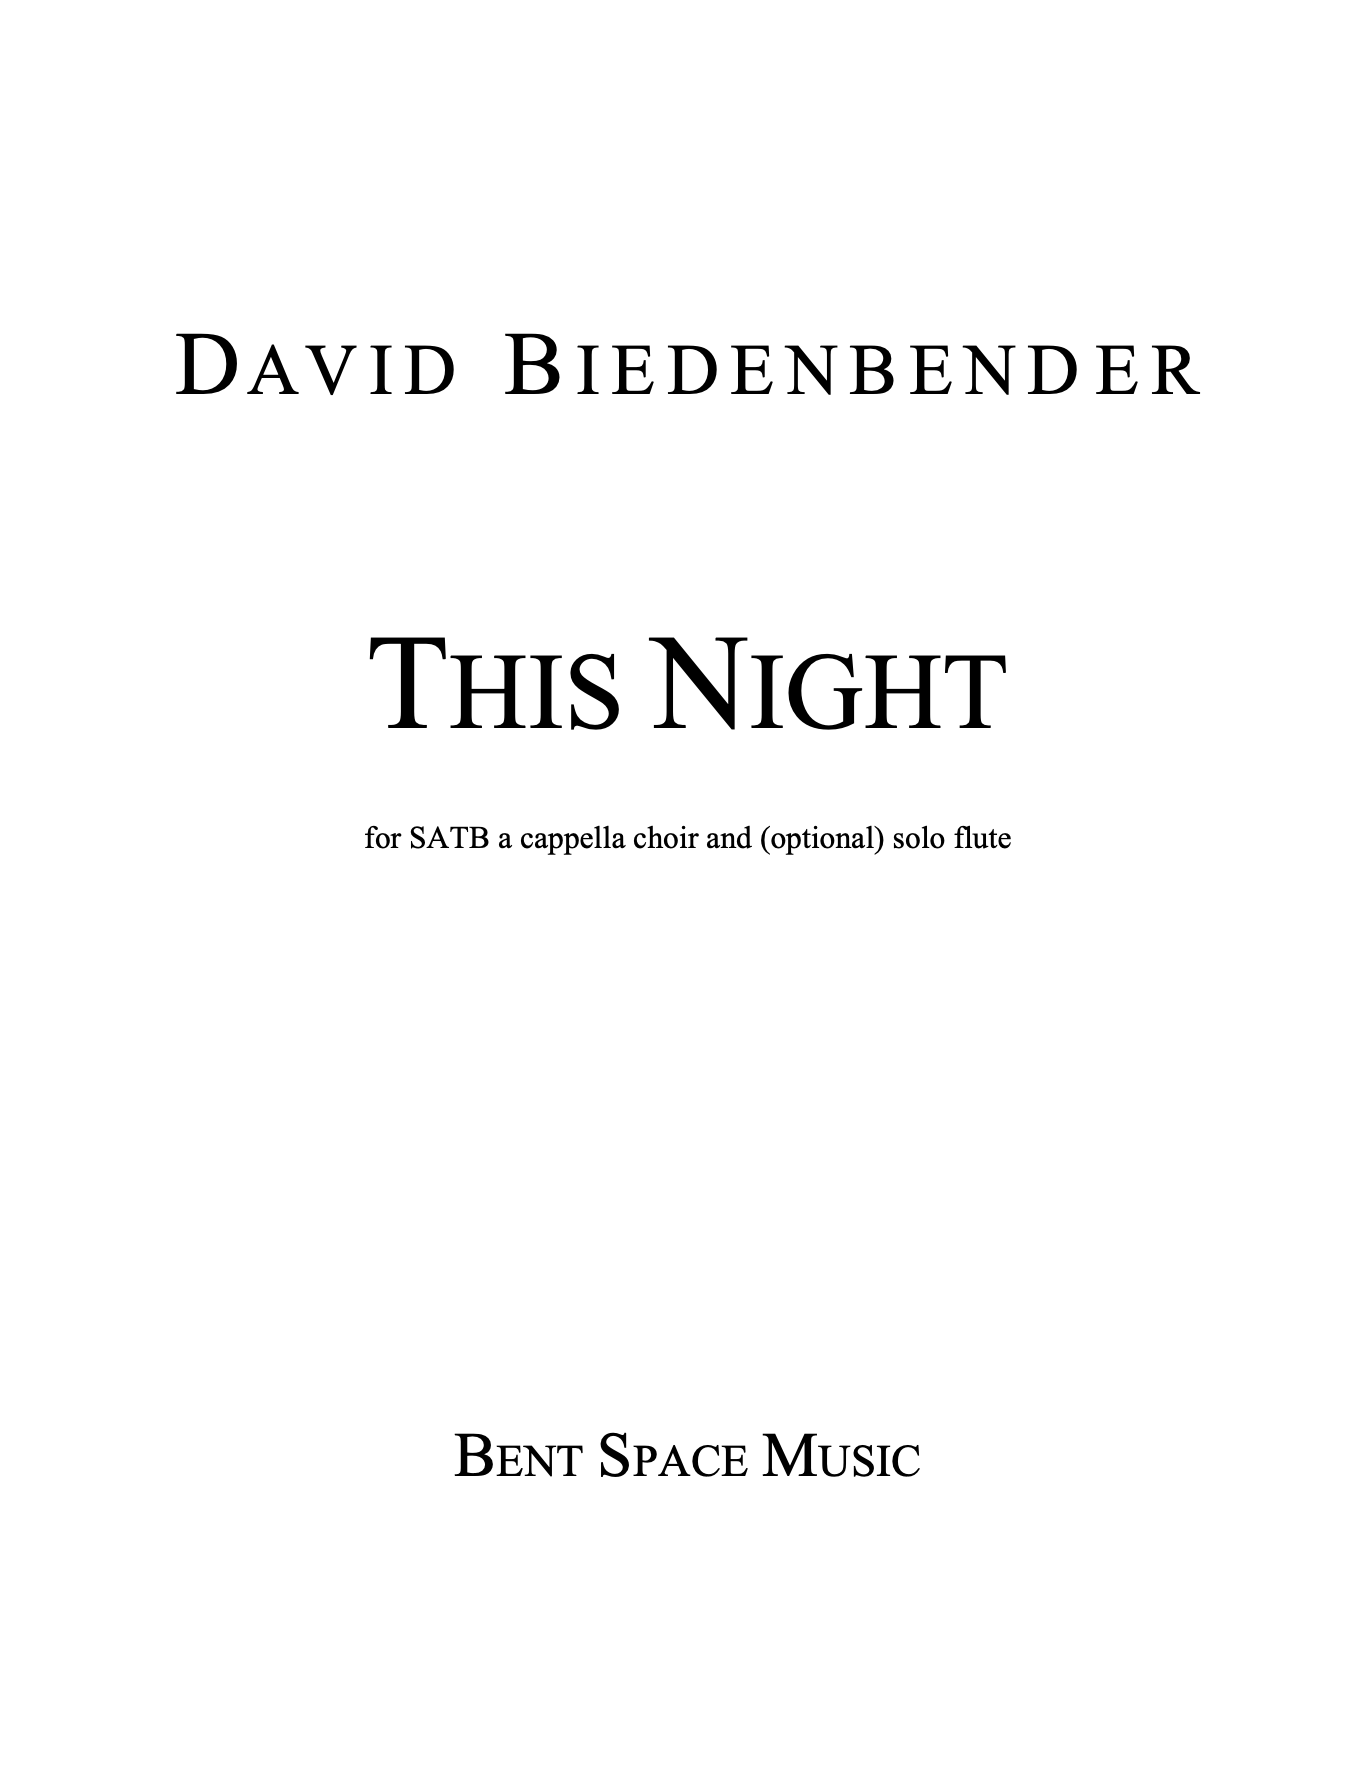 This Night (Choral Version) by David Biedenbender